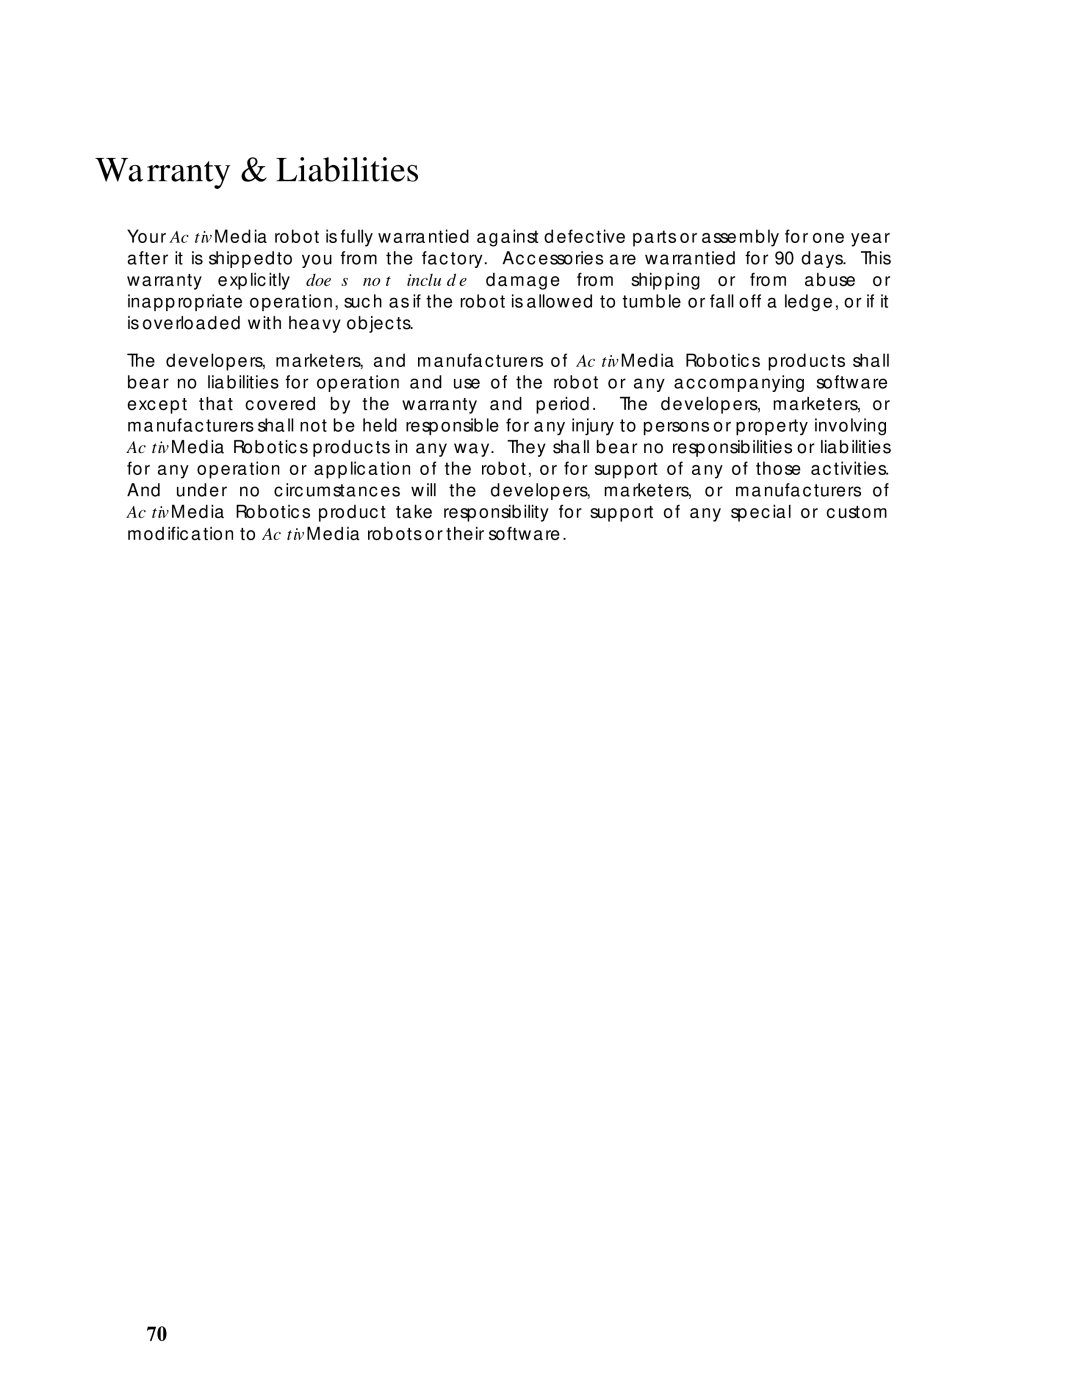 Pioneer 2 / PeopleBot manual Warranty & Liabilities 